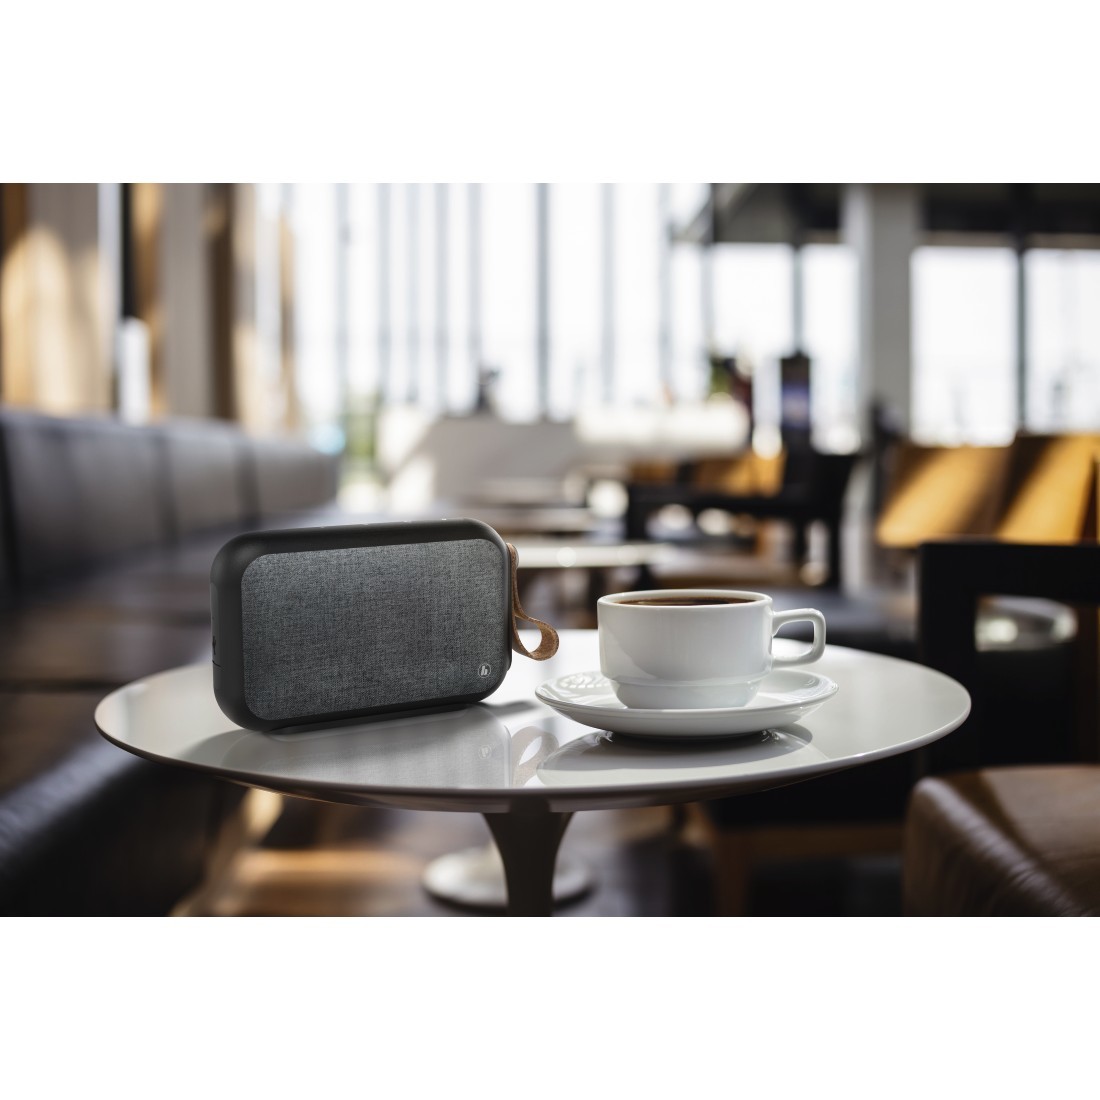 China P2 portable wireless bluetooth fabric speaker,home garden travel pool speakers,IPX5 waterproof speakers on sale